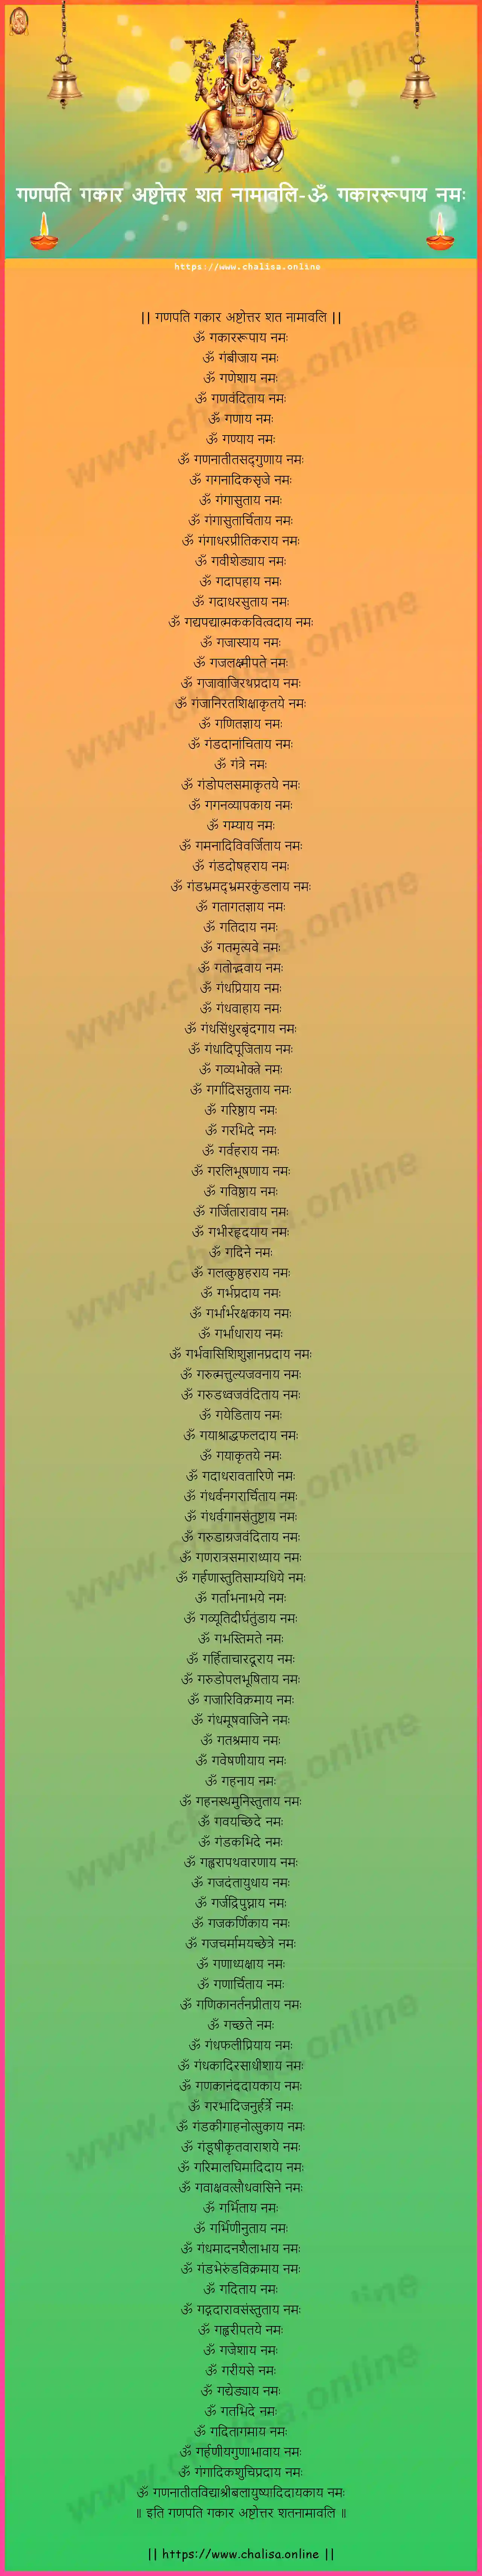 om-gakararupaya-ganapati-gakara-ashtottara-sata-namavali-marathi-marathi-lyrics-download